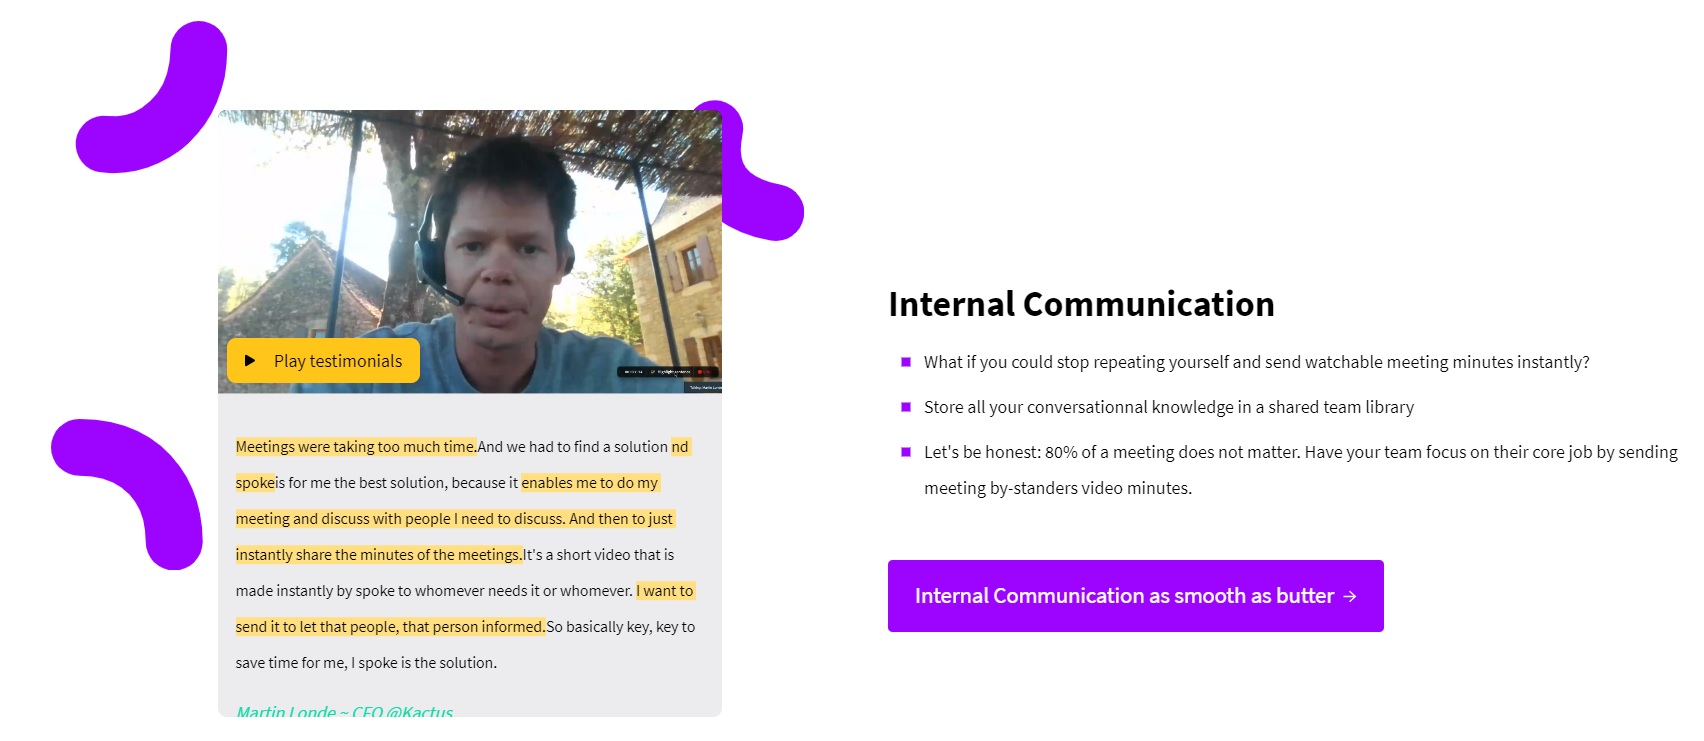 3. Internal Communication